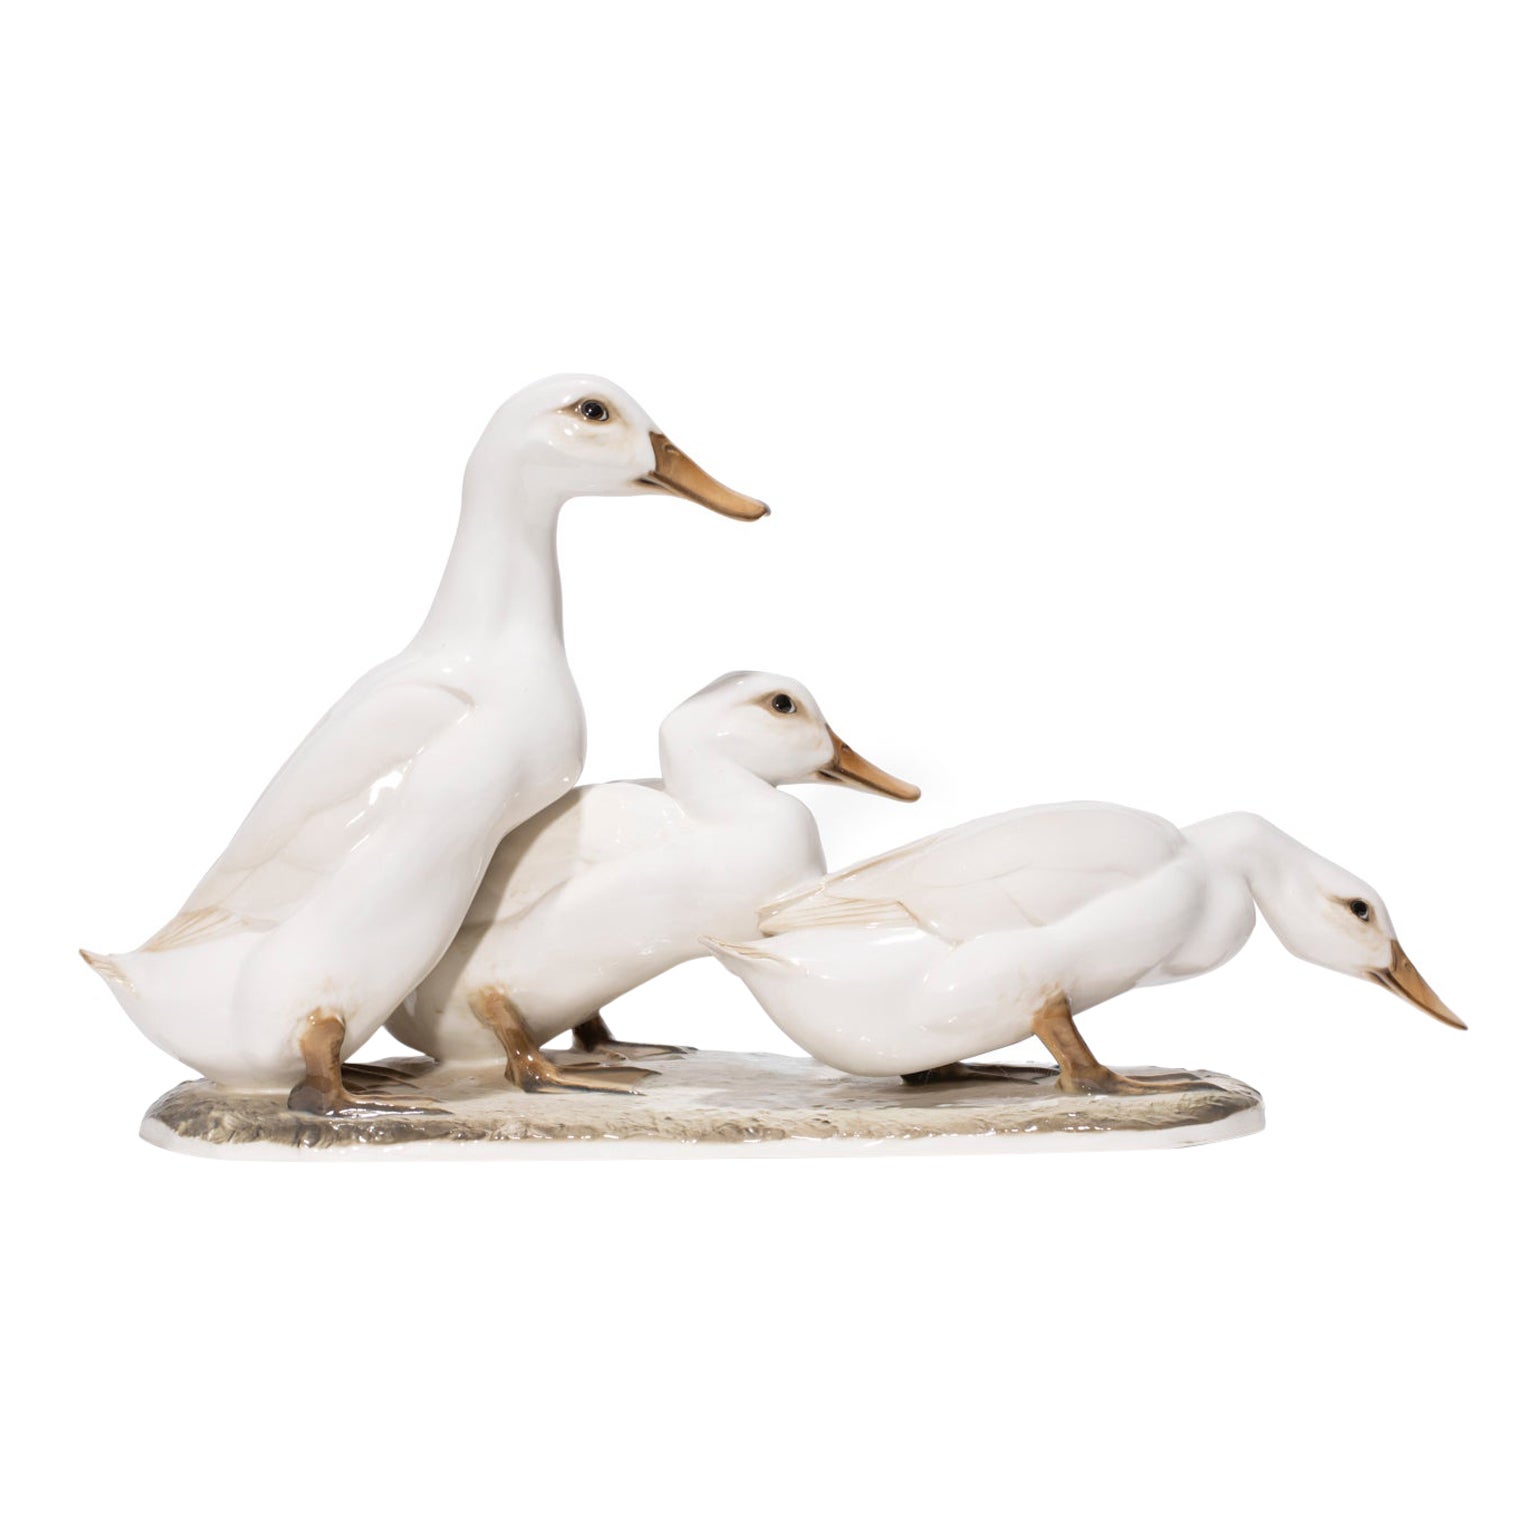 Hutschenreuther-Selb Porcelain Figurine "THREE DUCKS" For Sale